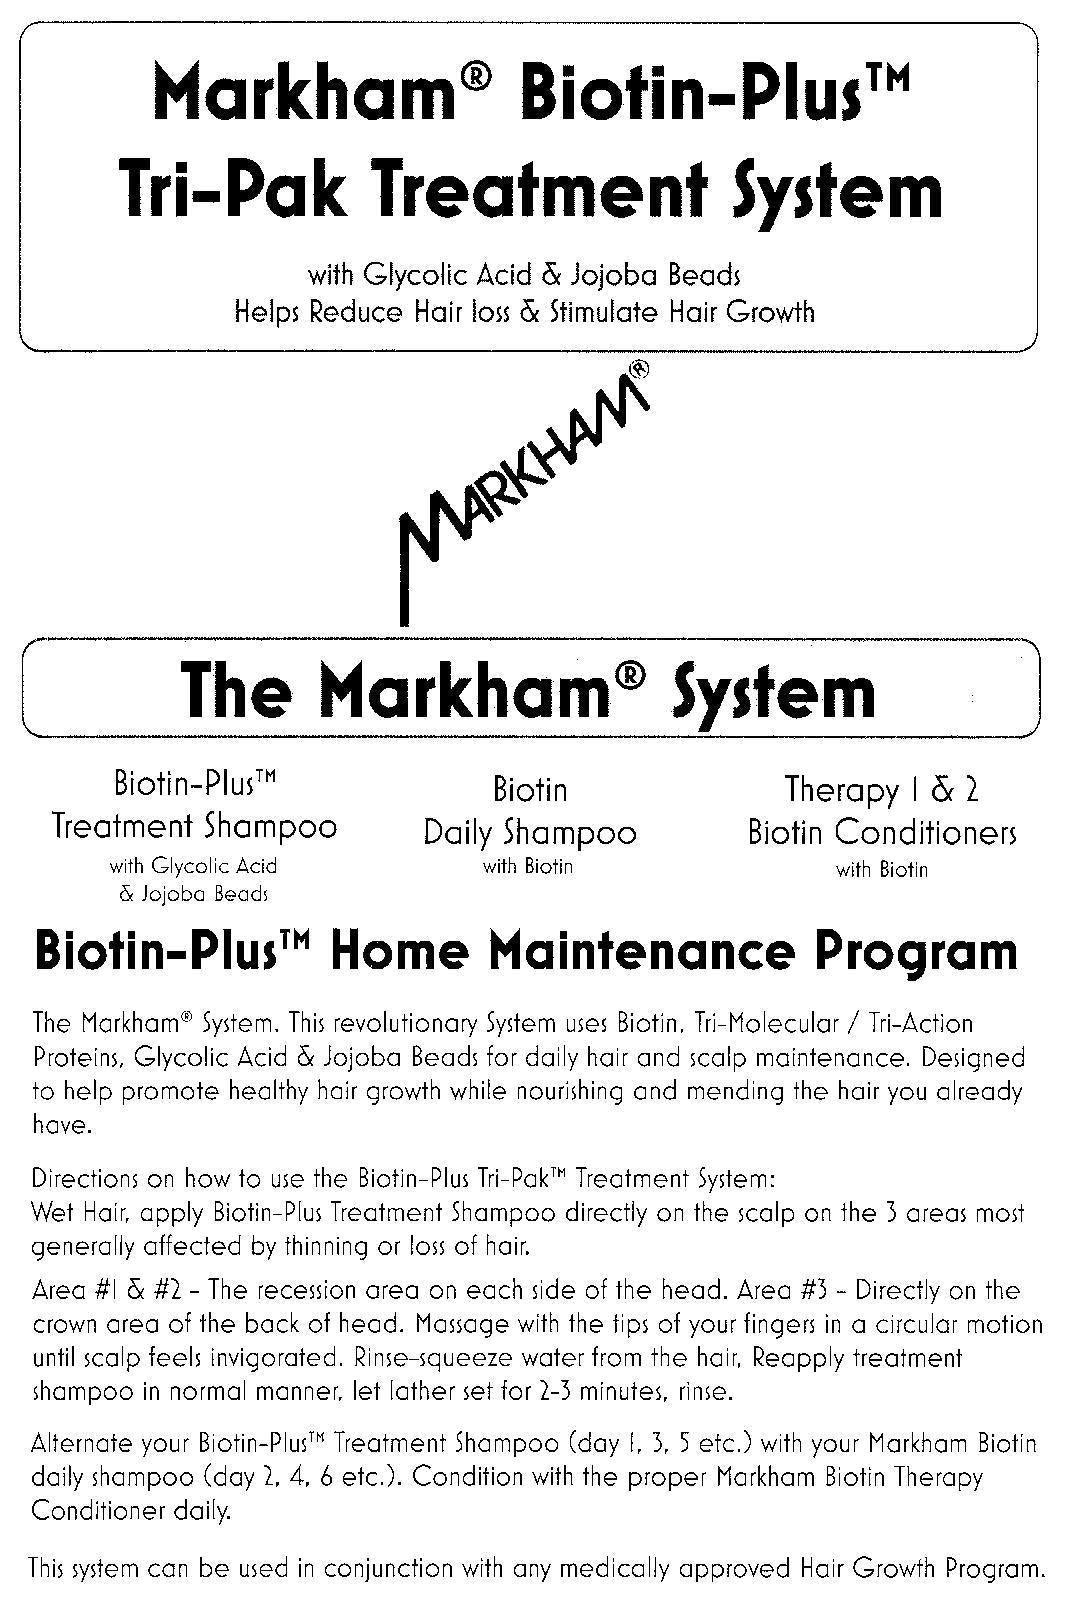 markham biotin plus hair loss 1